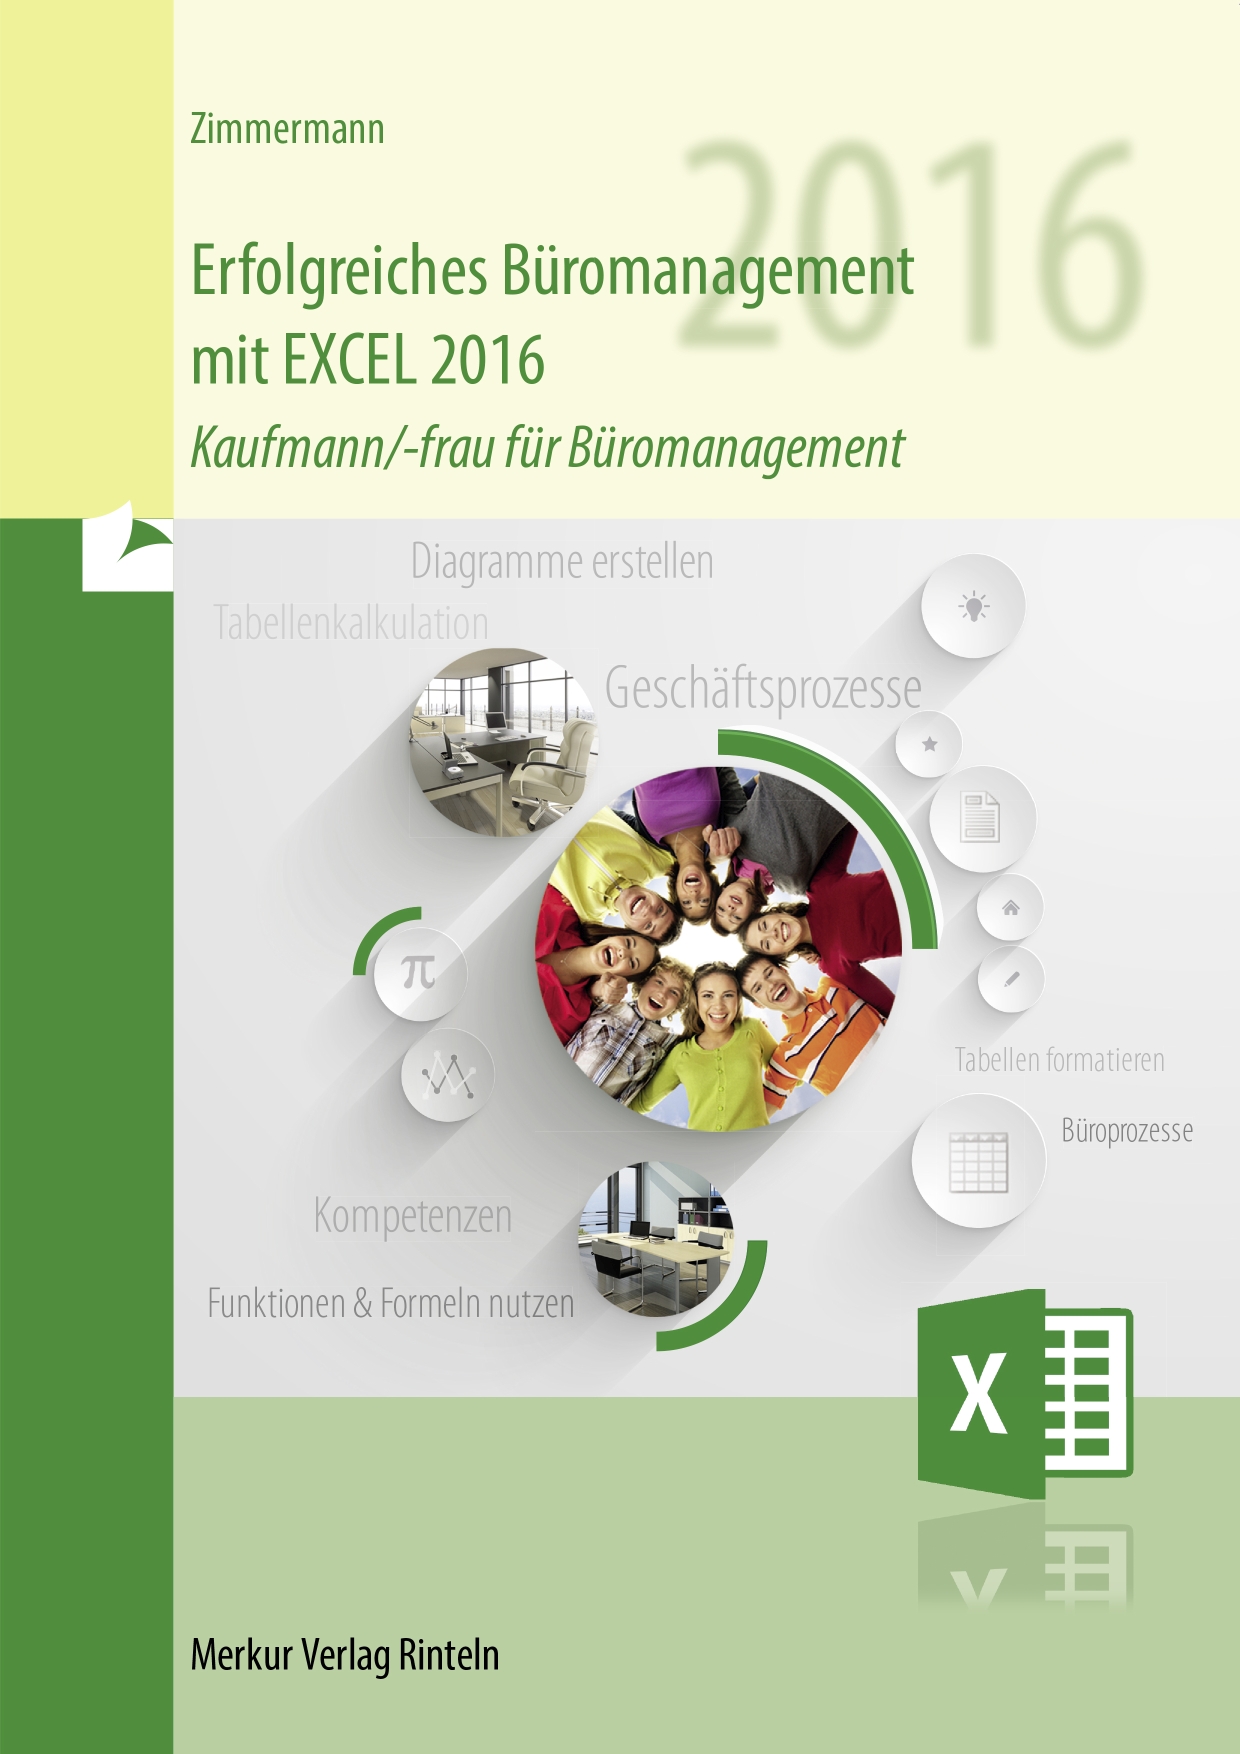 Erfolgreiches Büromanagement EXCEL 2016 Kaufmann/-frau für Büromanagement